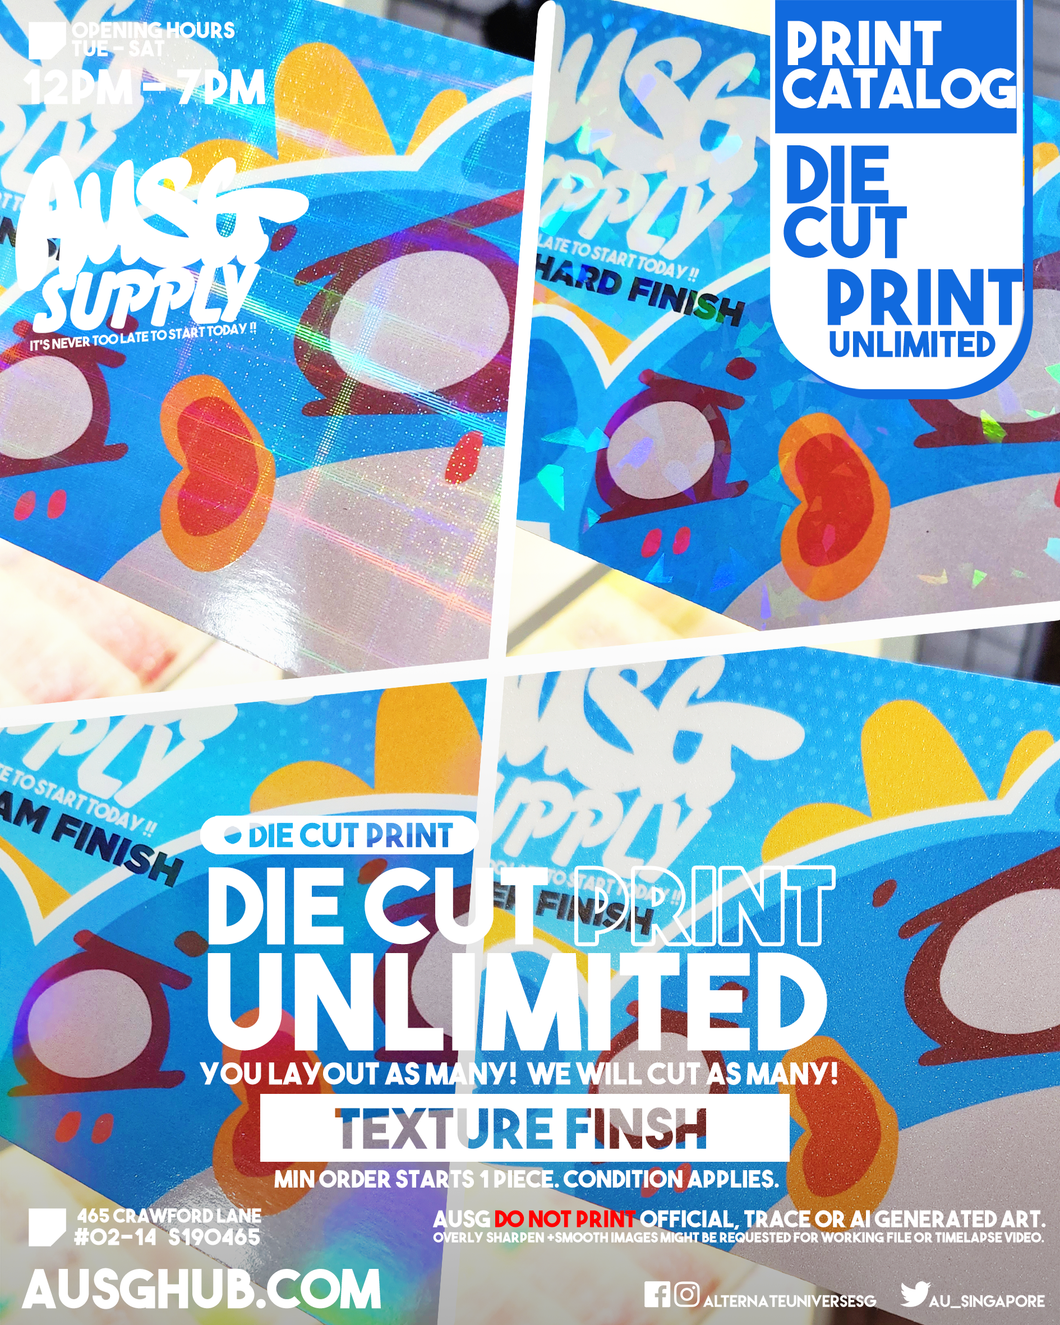 UNLIMITED Die Cut Digital Prints - 310GSM Texture Finish